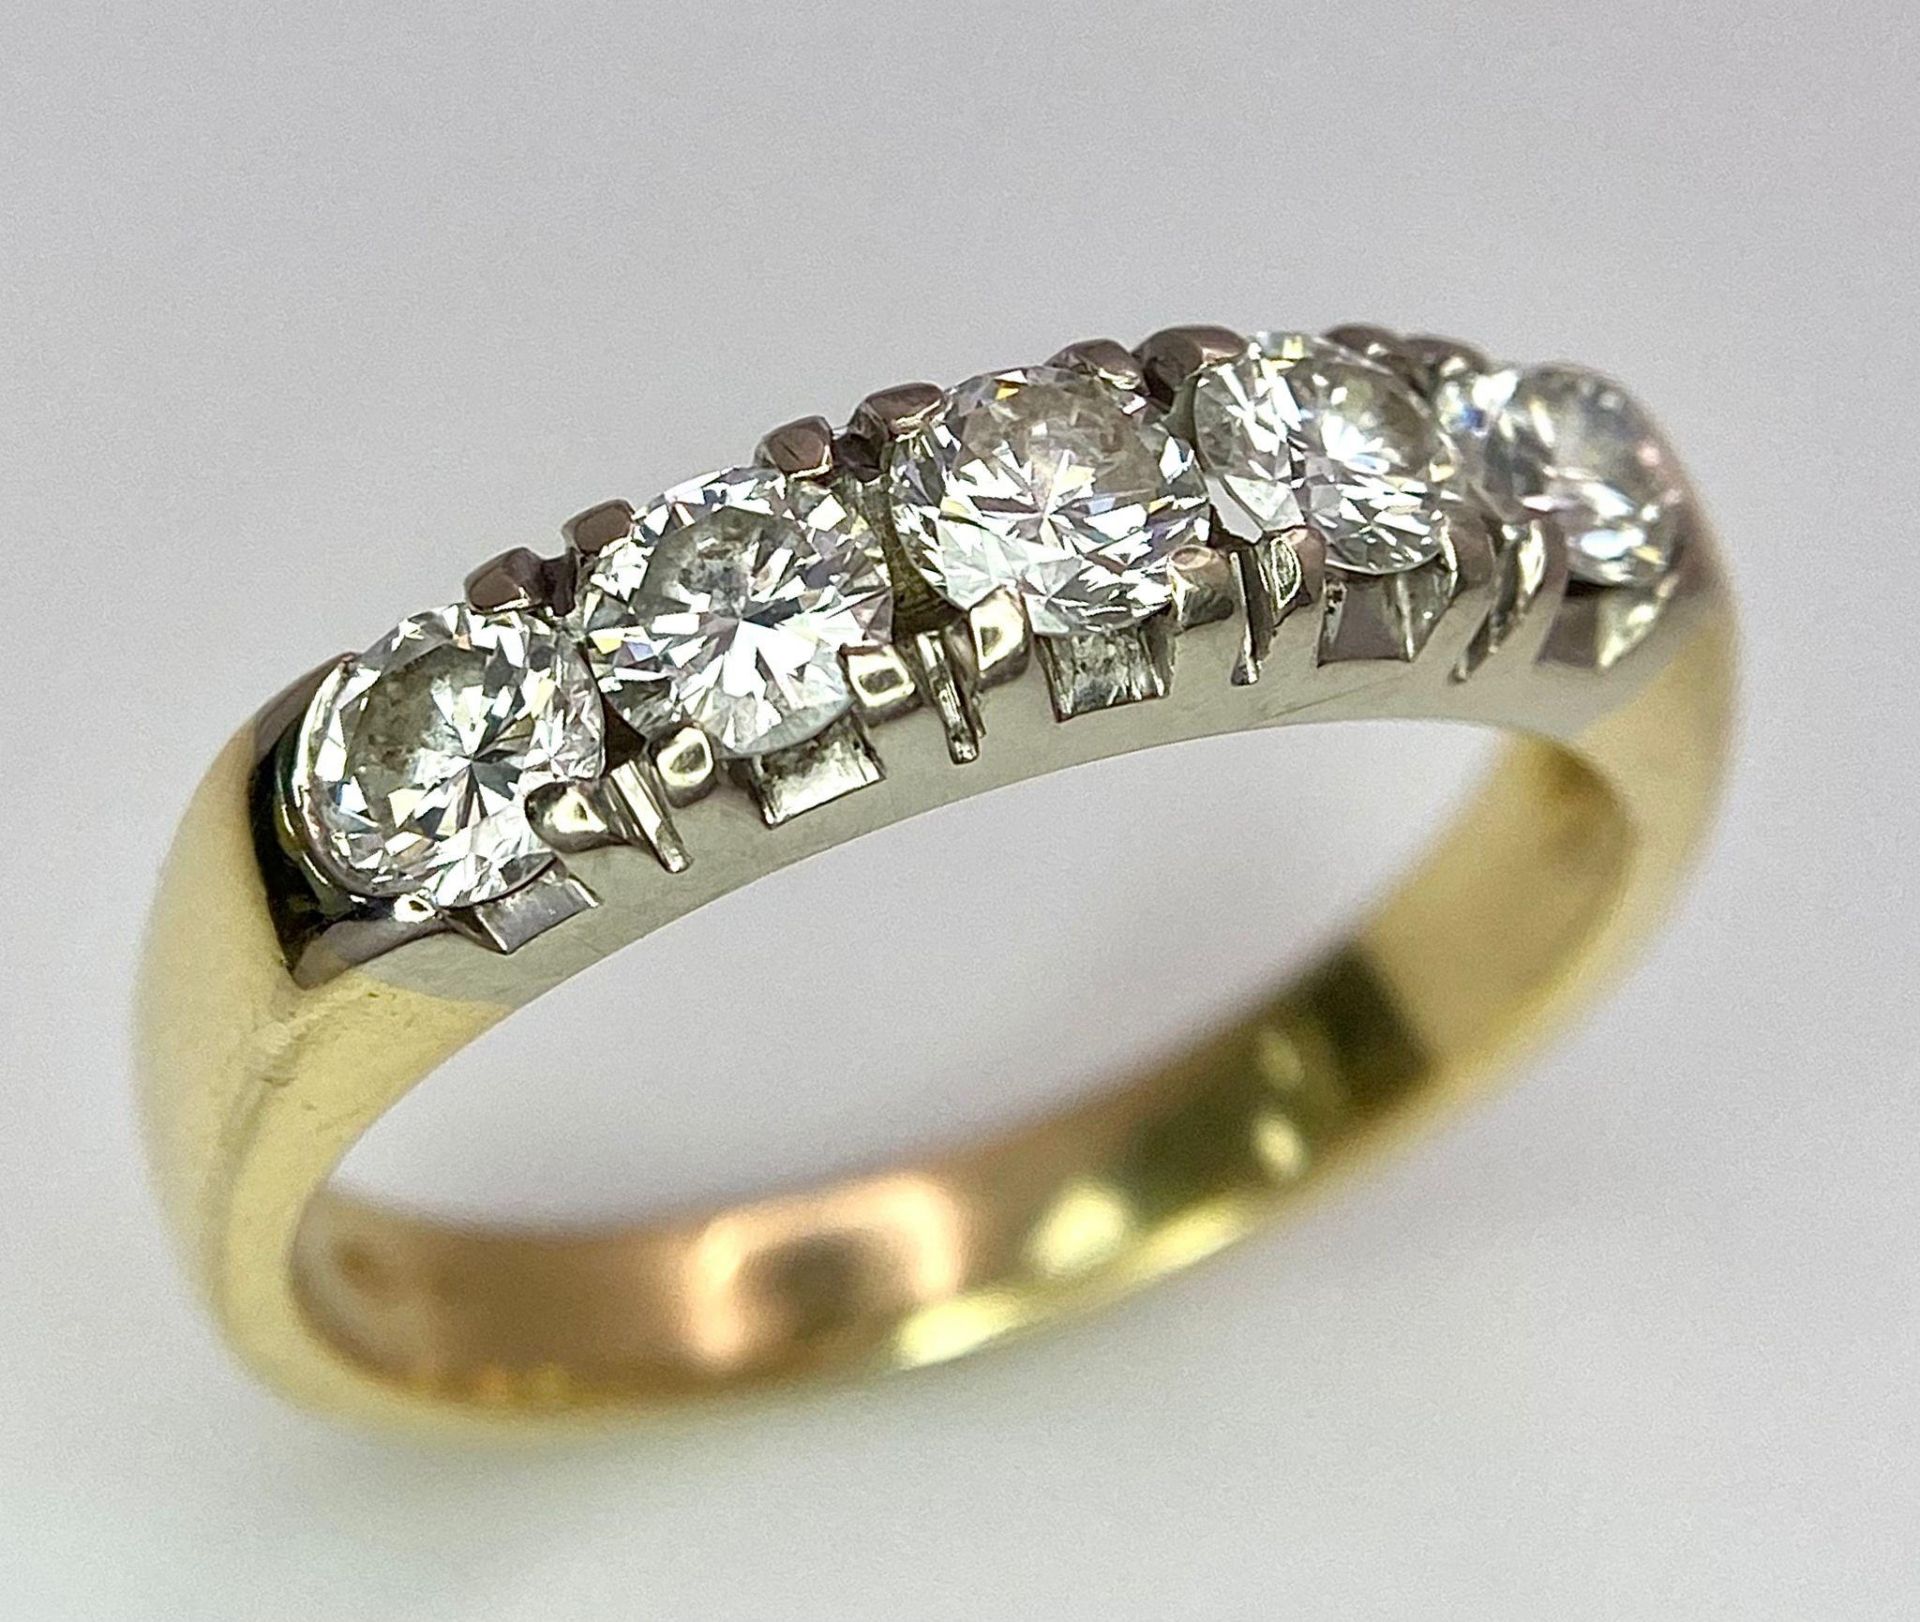 An 18K Yellow Gold Five Stone Diamond Ring. 0.85ctw of brilliant round cut diamonds. Size L. 3.6g - Image 2 of 8